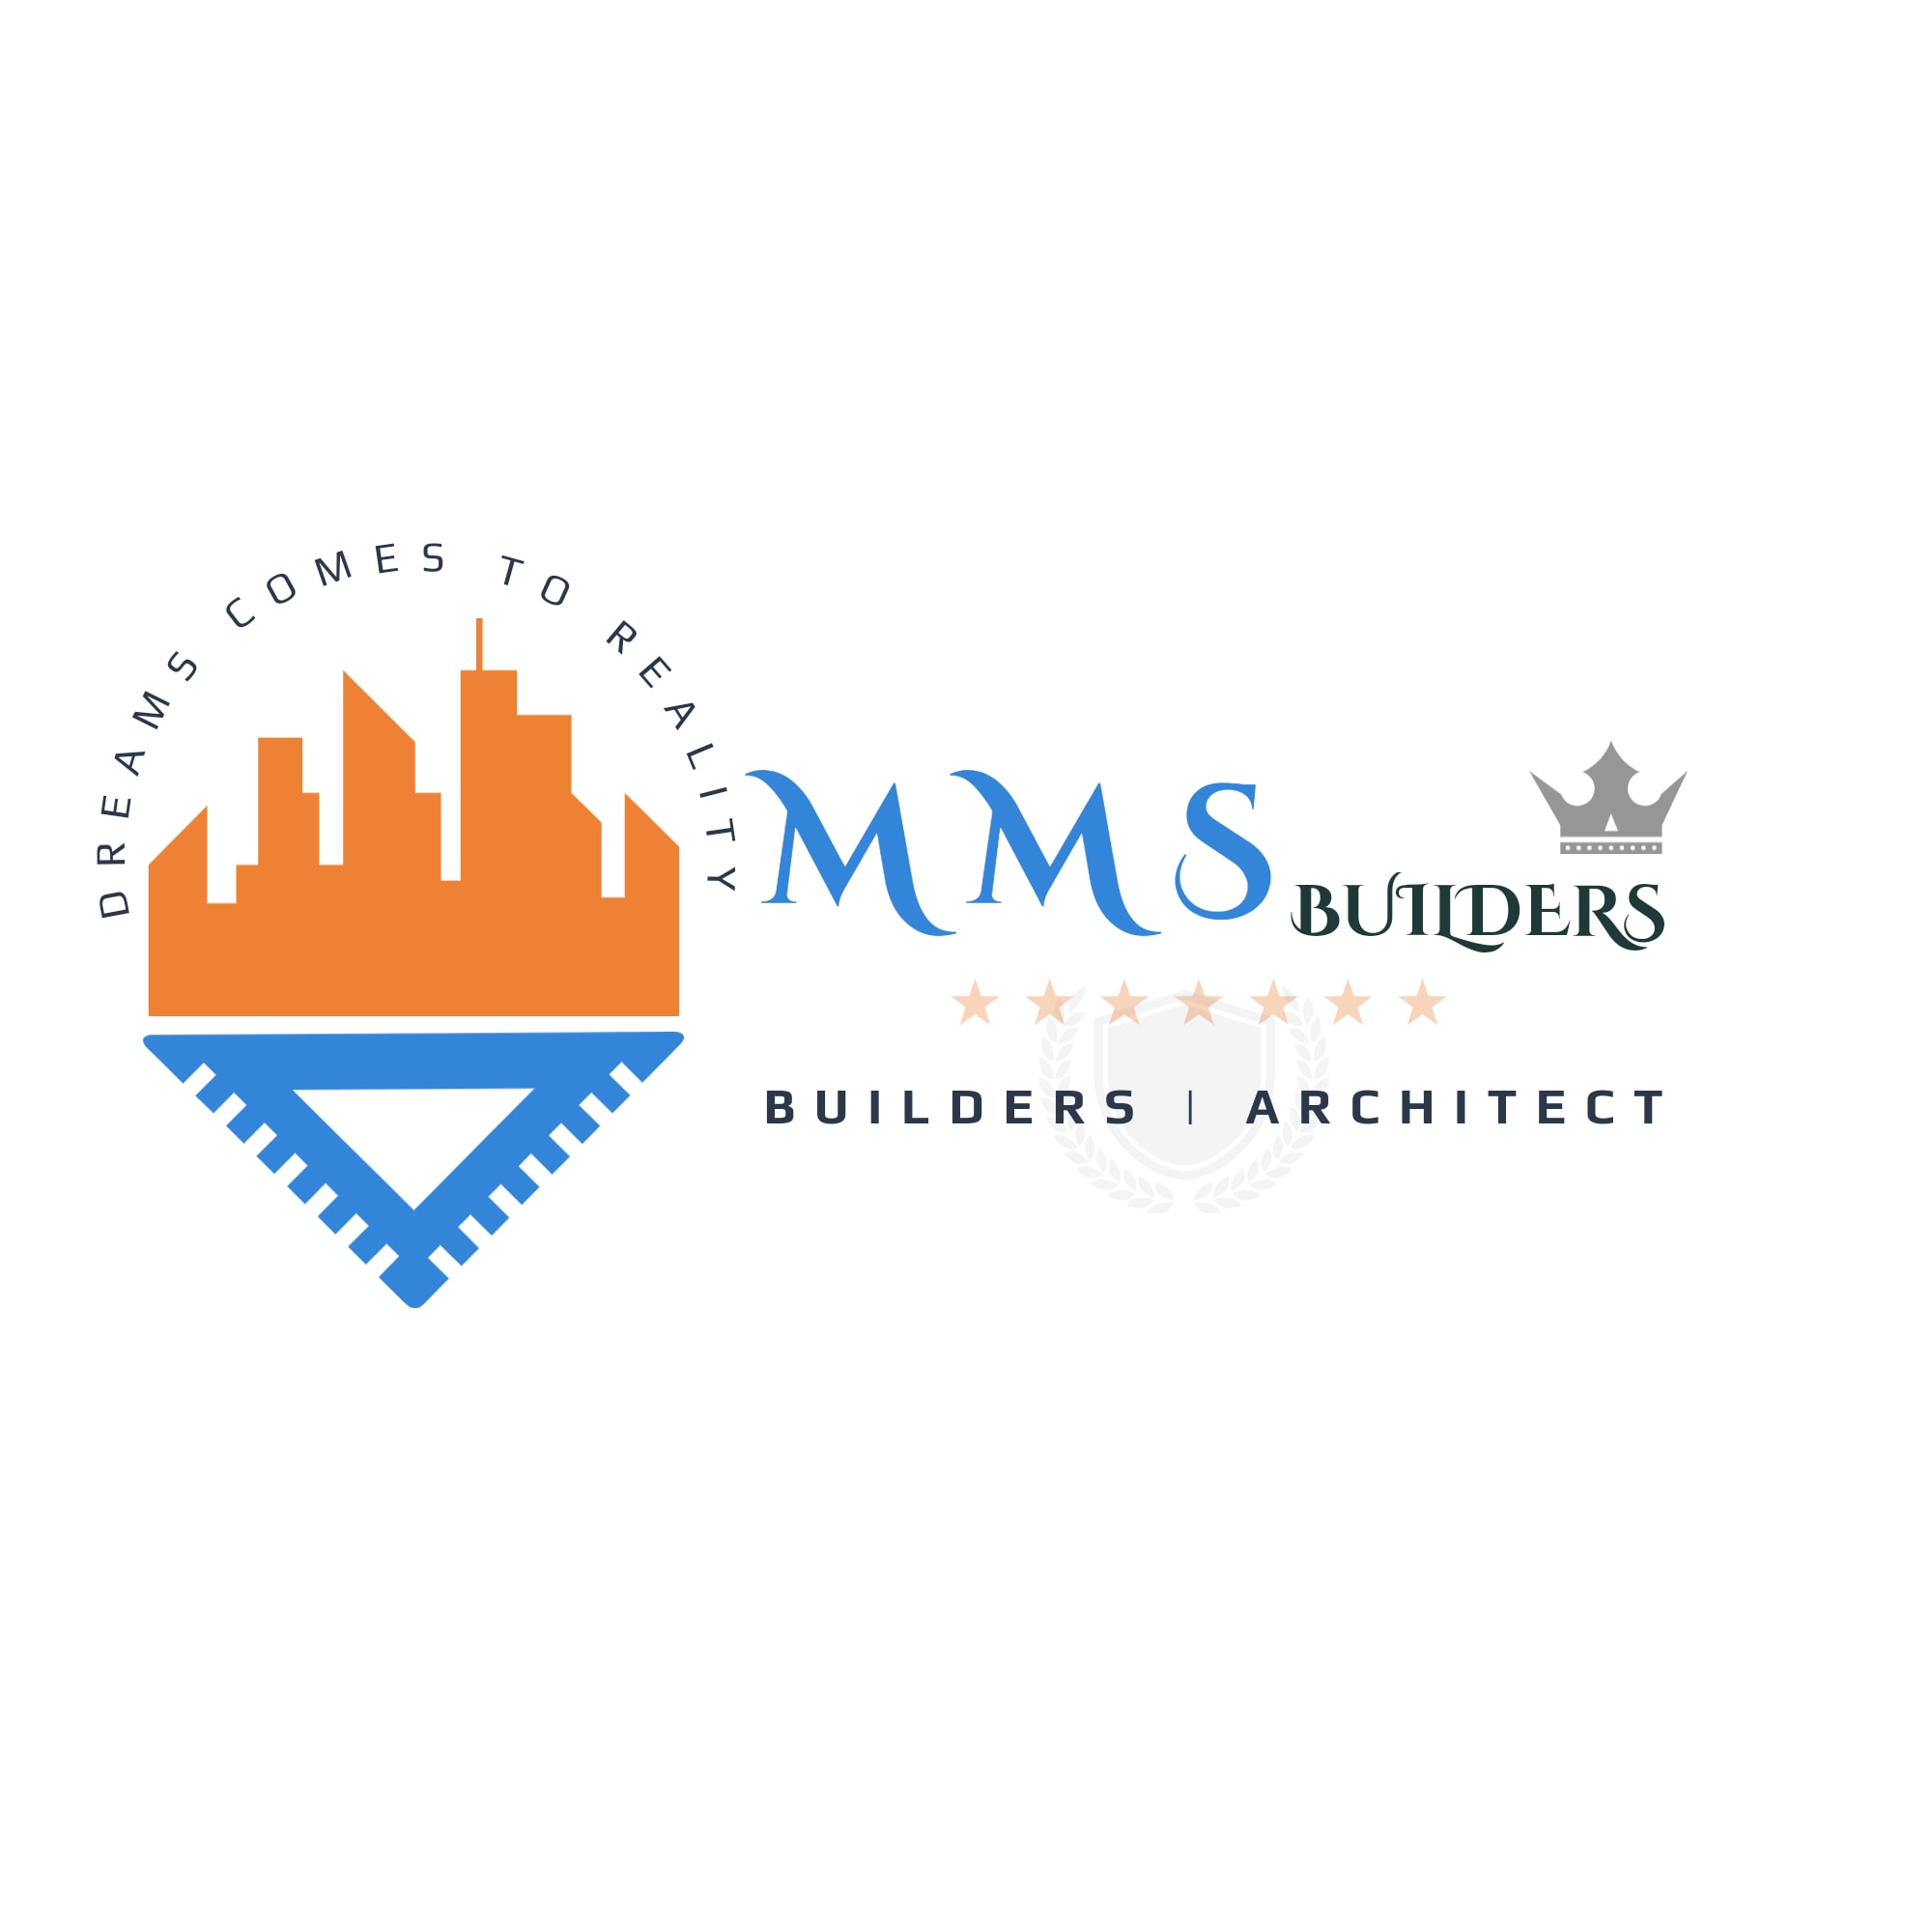 M M S Builders & Architect - Logo